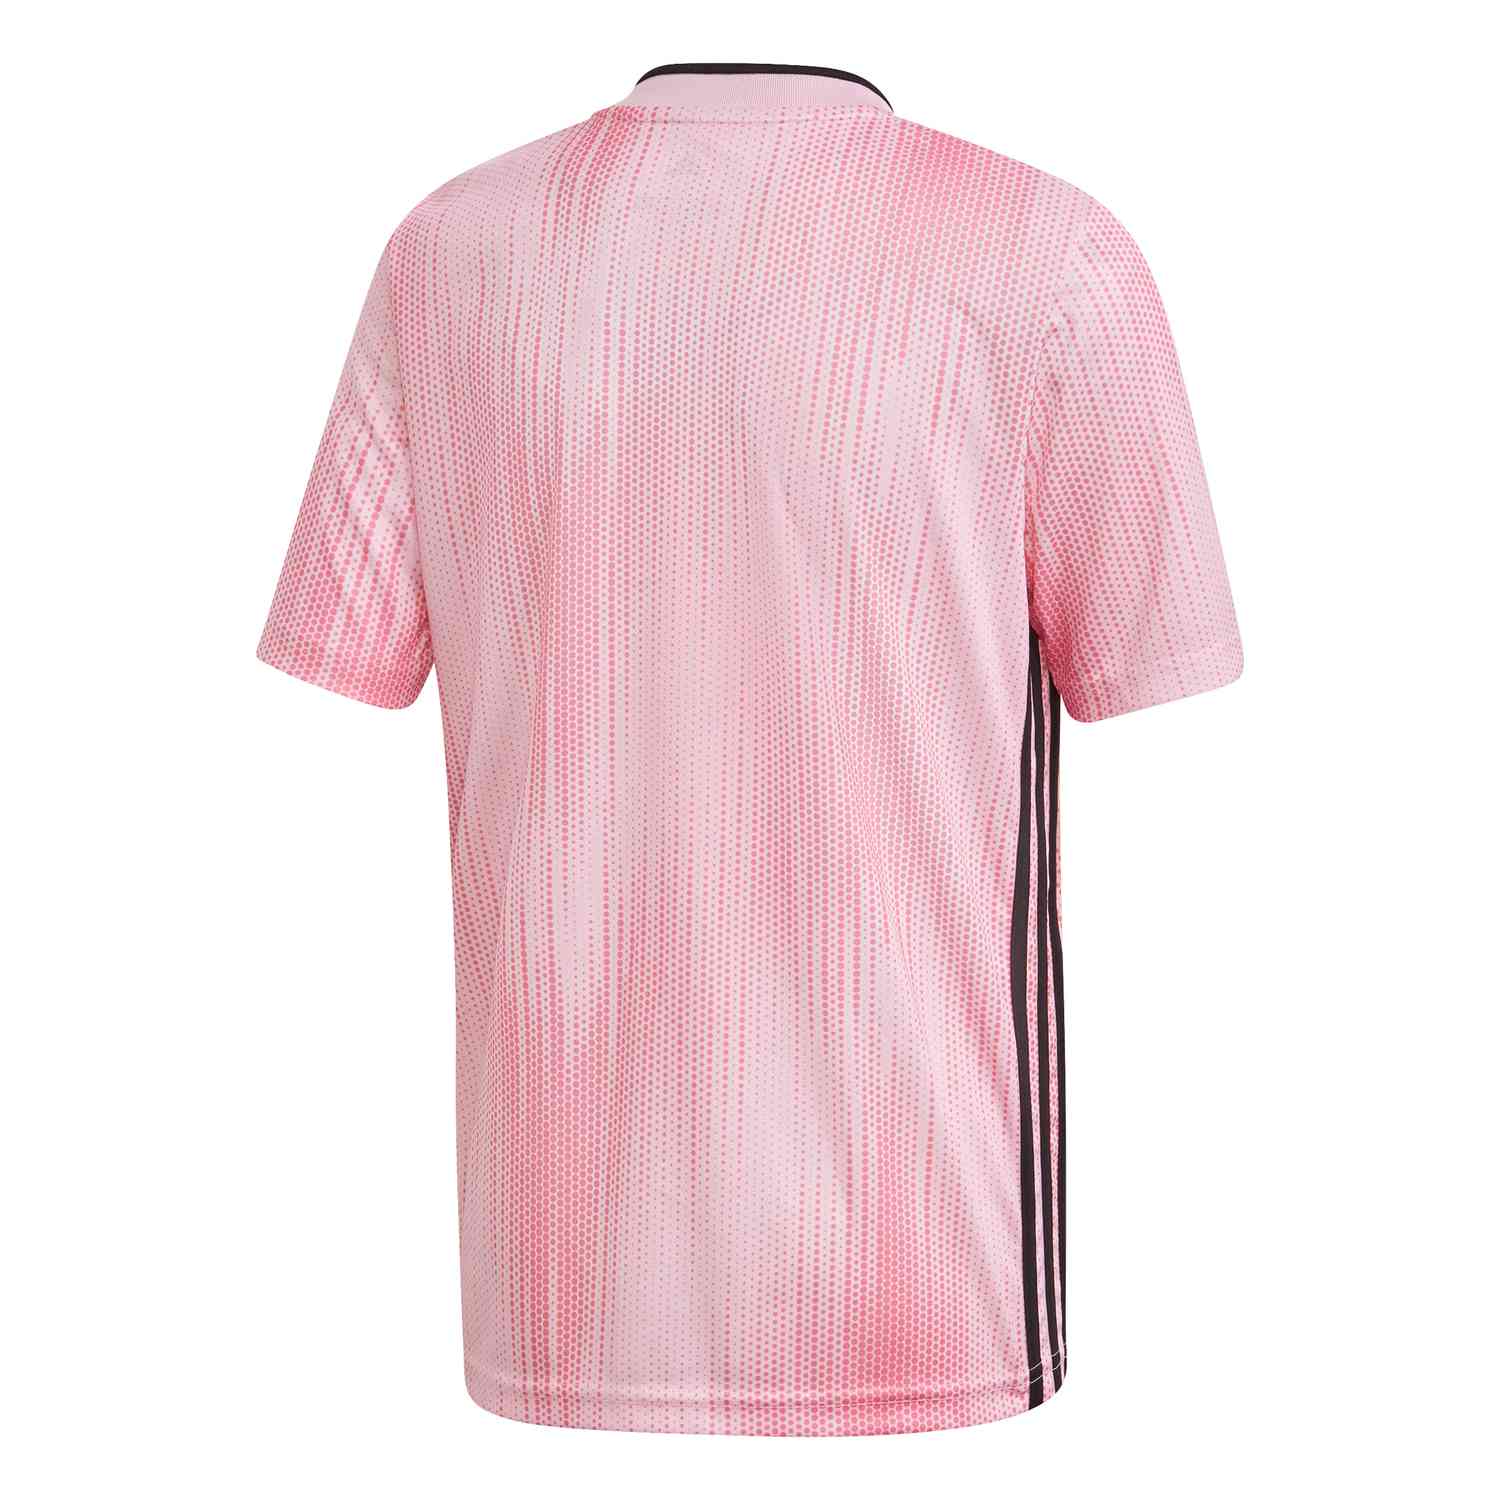 Kids adidas Tiro 19 Jersey - True Pink/Black - SoccerPro